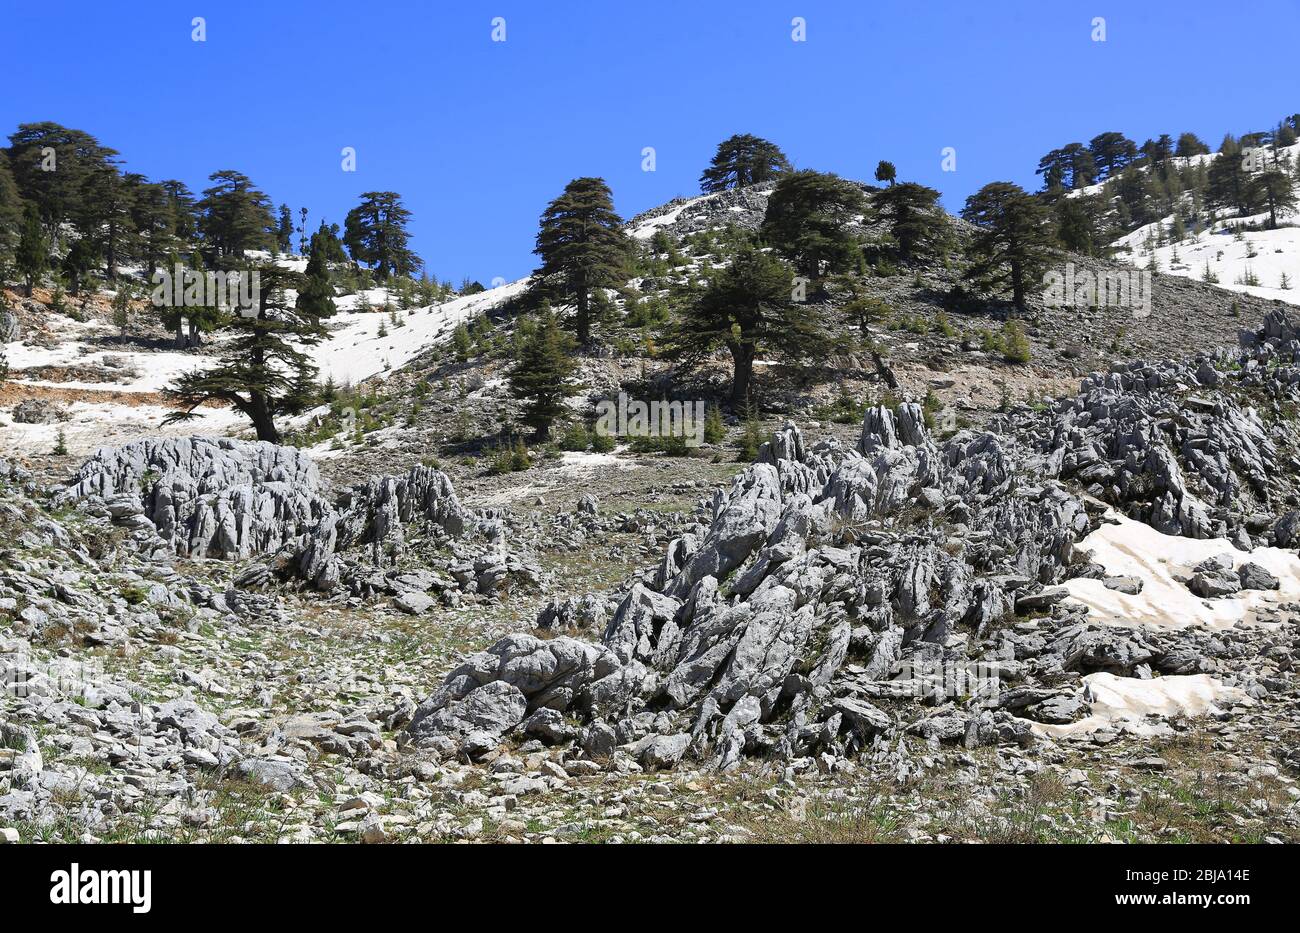 Cedar trees among stones in mountains on blue sky background. Likya Yolu tourist way in Turkey. Stock Photo